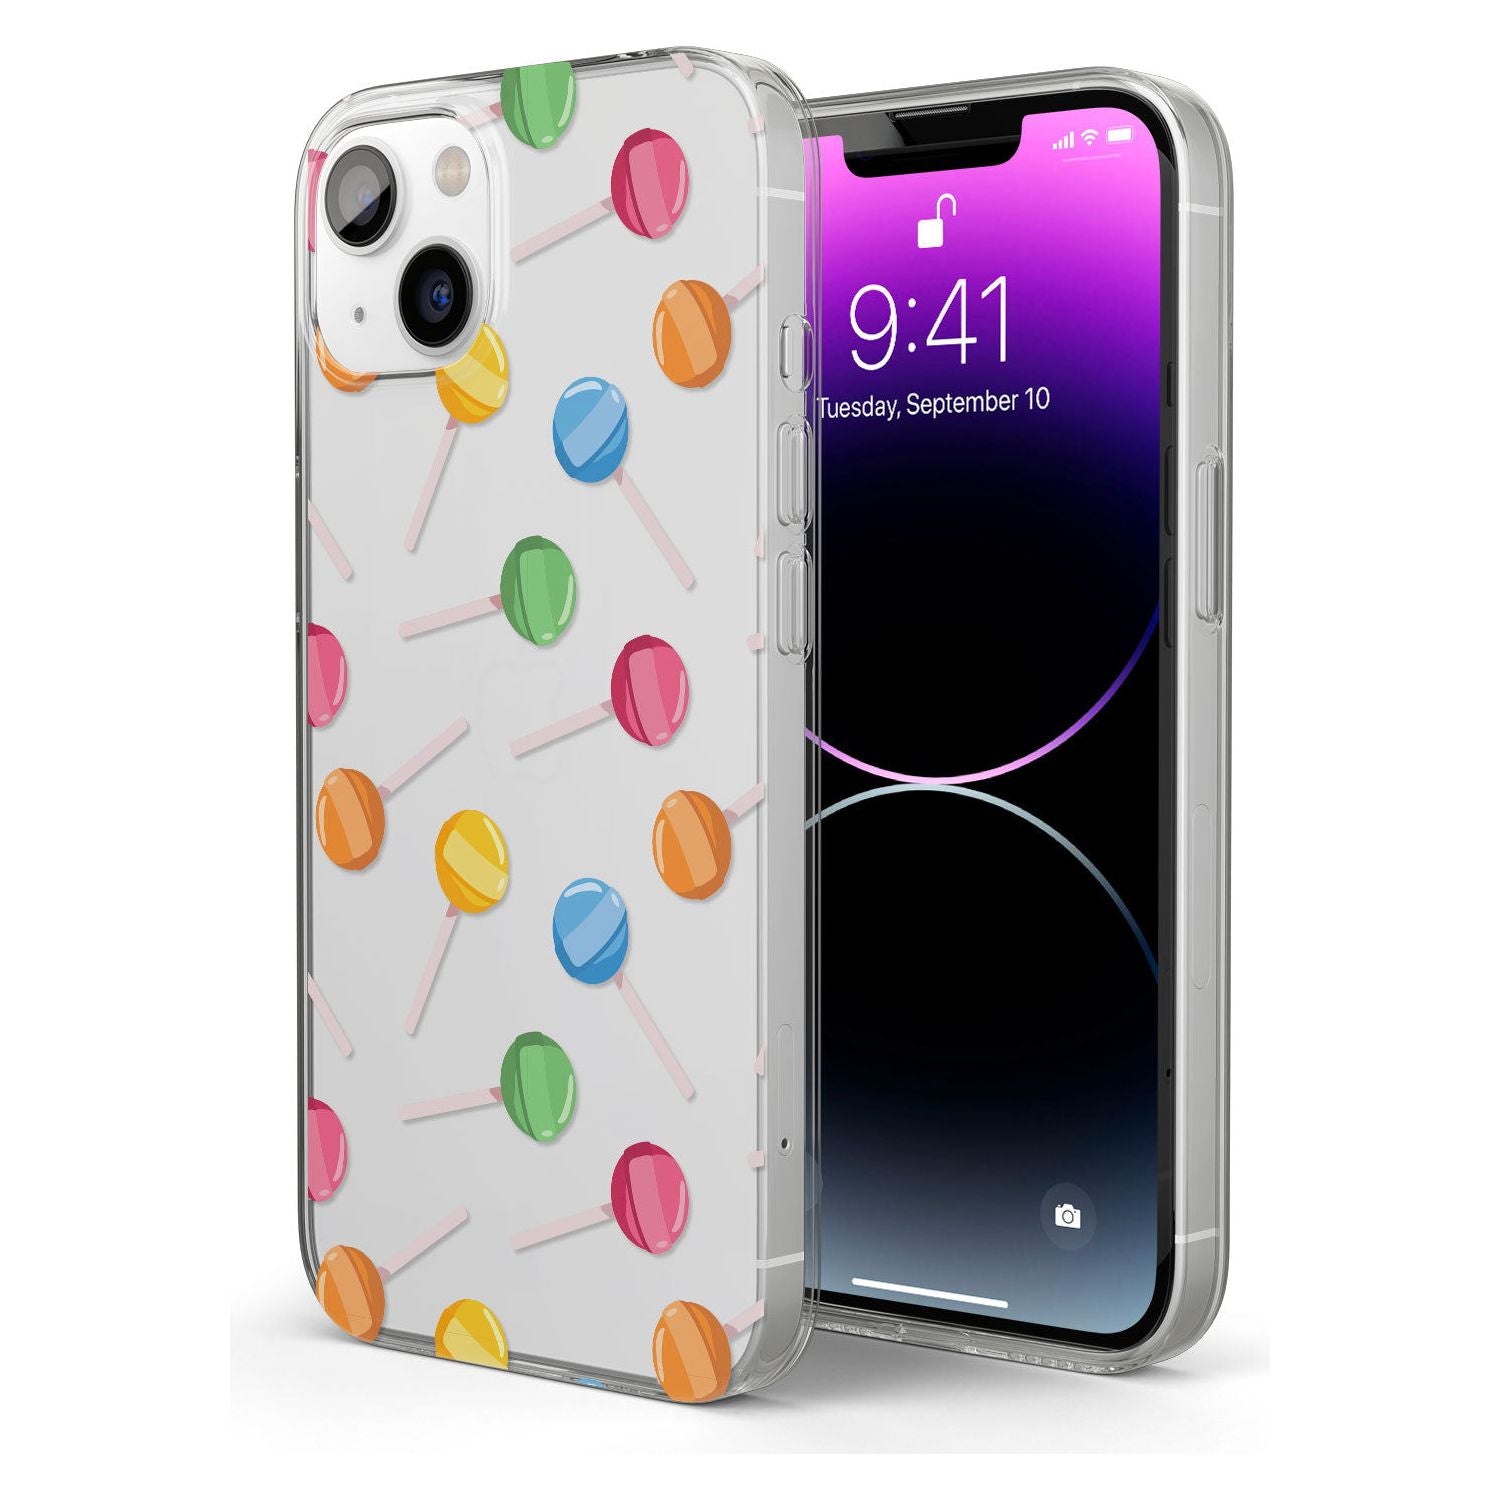 Lollipop PatternPhone Case for iPhone 13 Mini